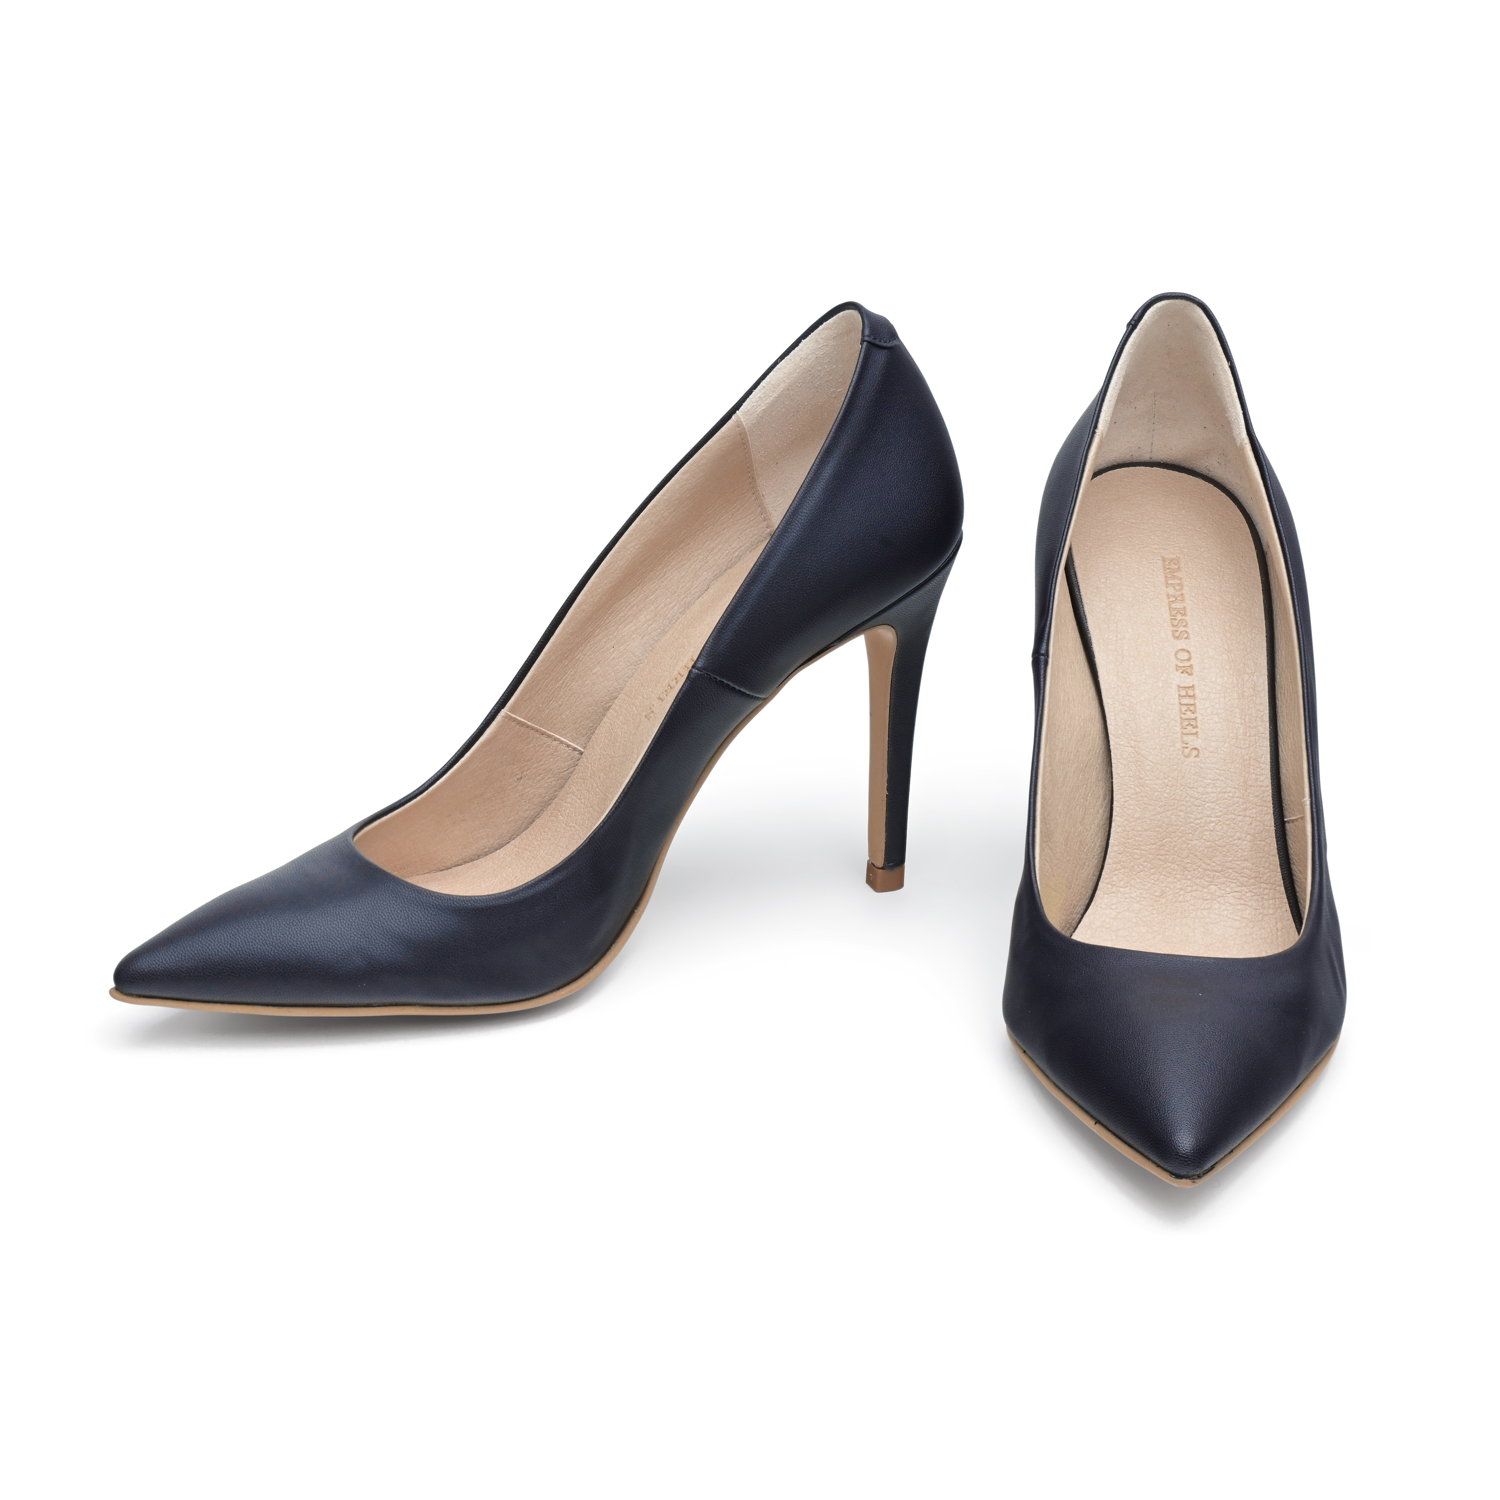 Karen Millen Shoes Navy Blue Pointed Toe High Heel Stiletto Pumps Heels  Size 36 | eBay